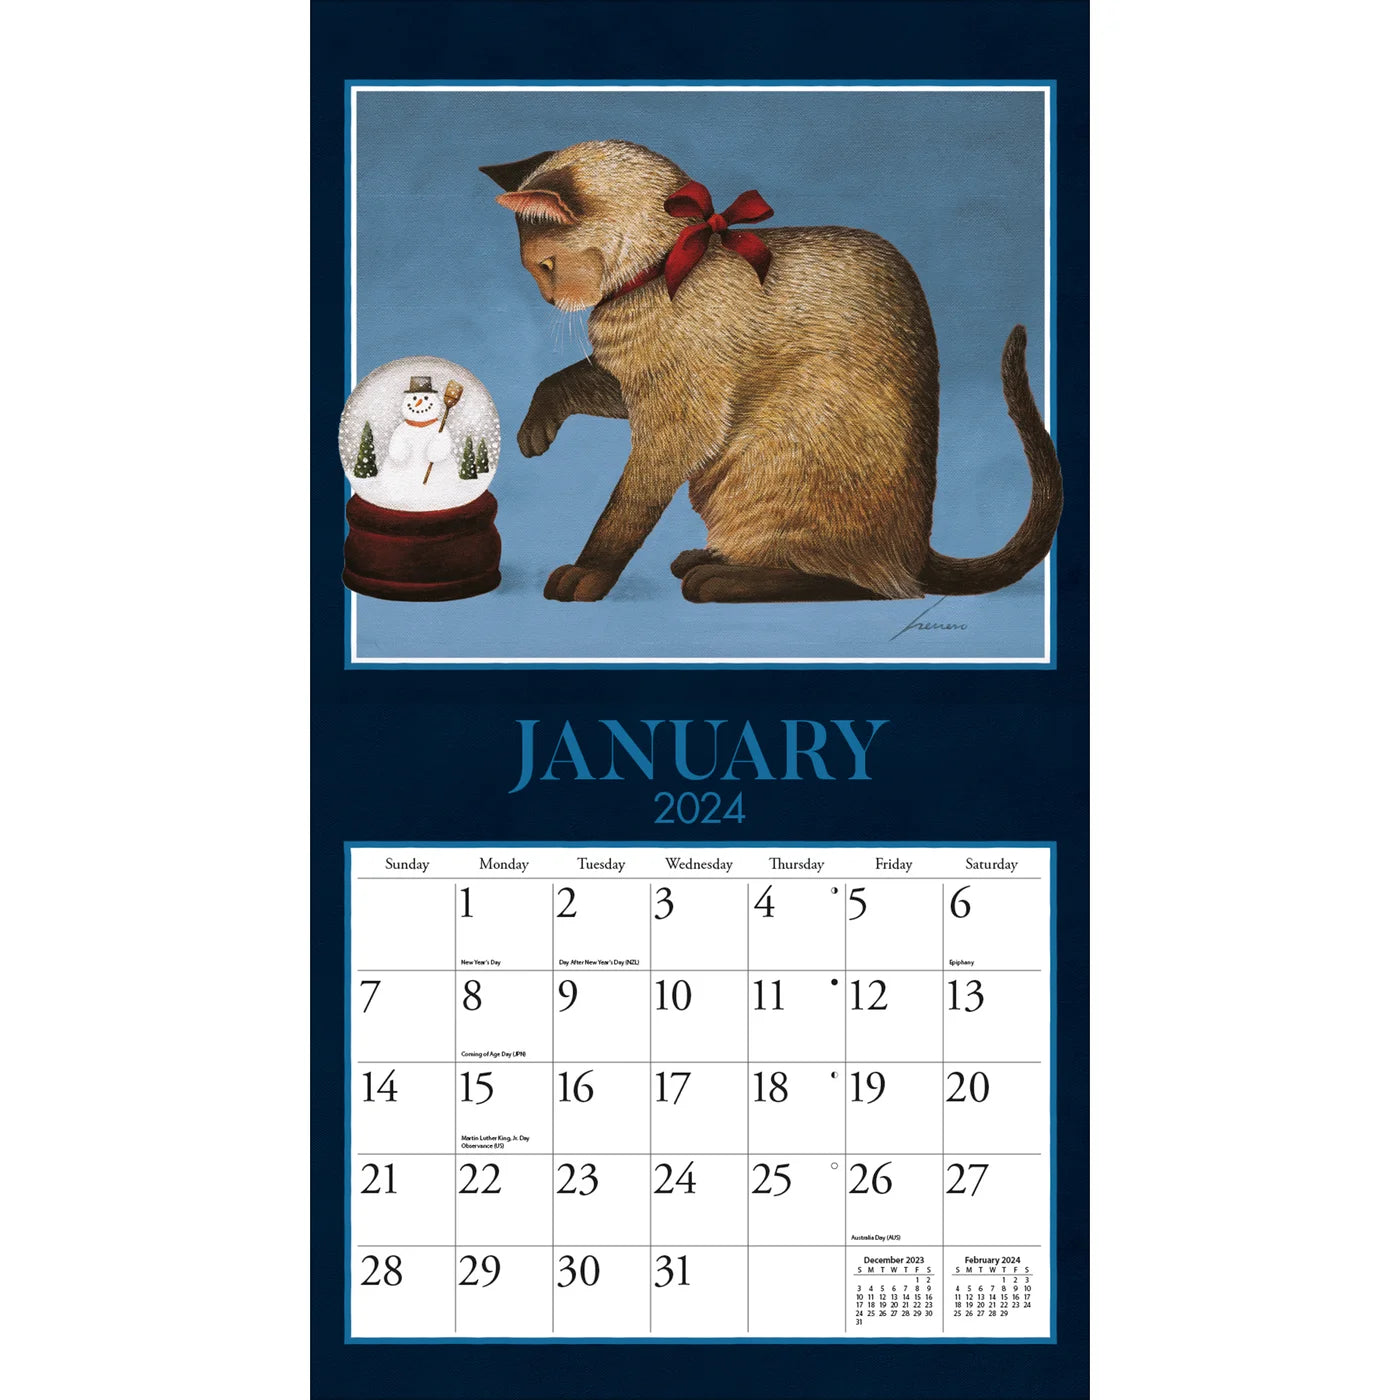 2024 LANG American Cat By Lowell Herrero - Deluxe Wall Calendar